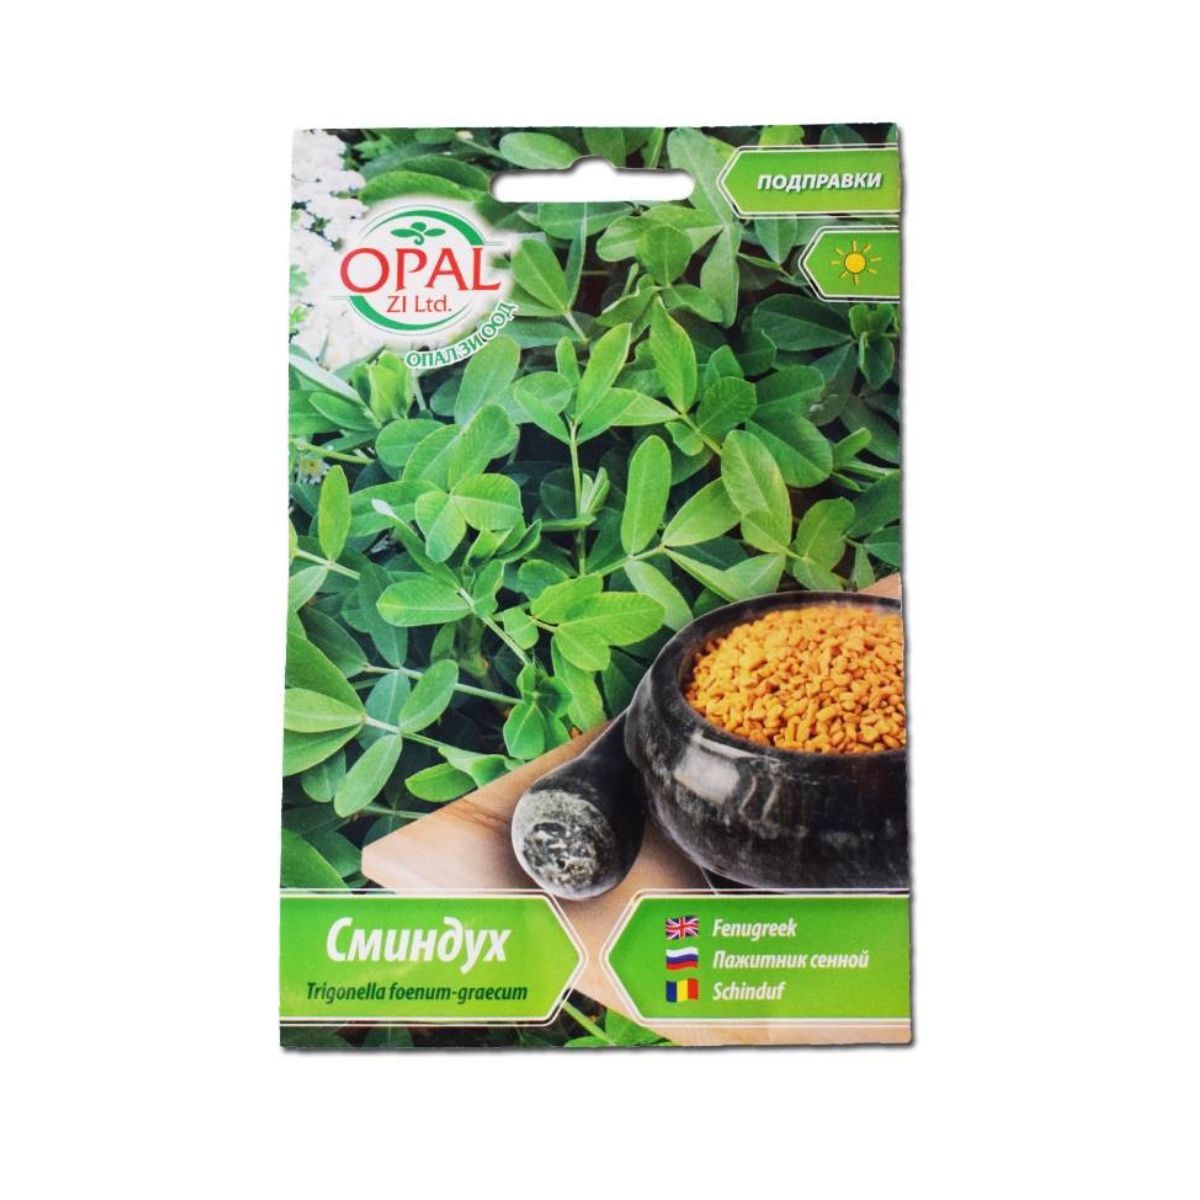 Seminte plante aromatice - Seminte de Schinduf, 0.2 grame OPAL, hectarul.ro